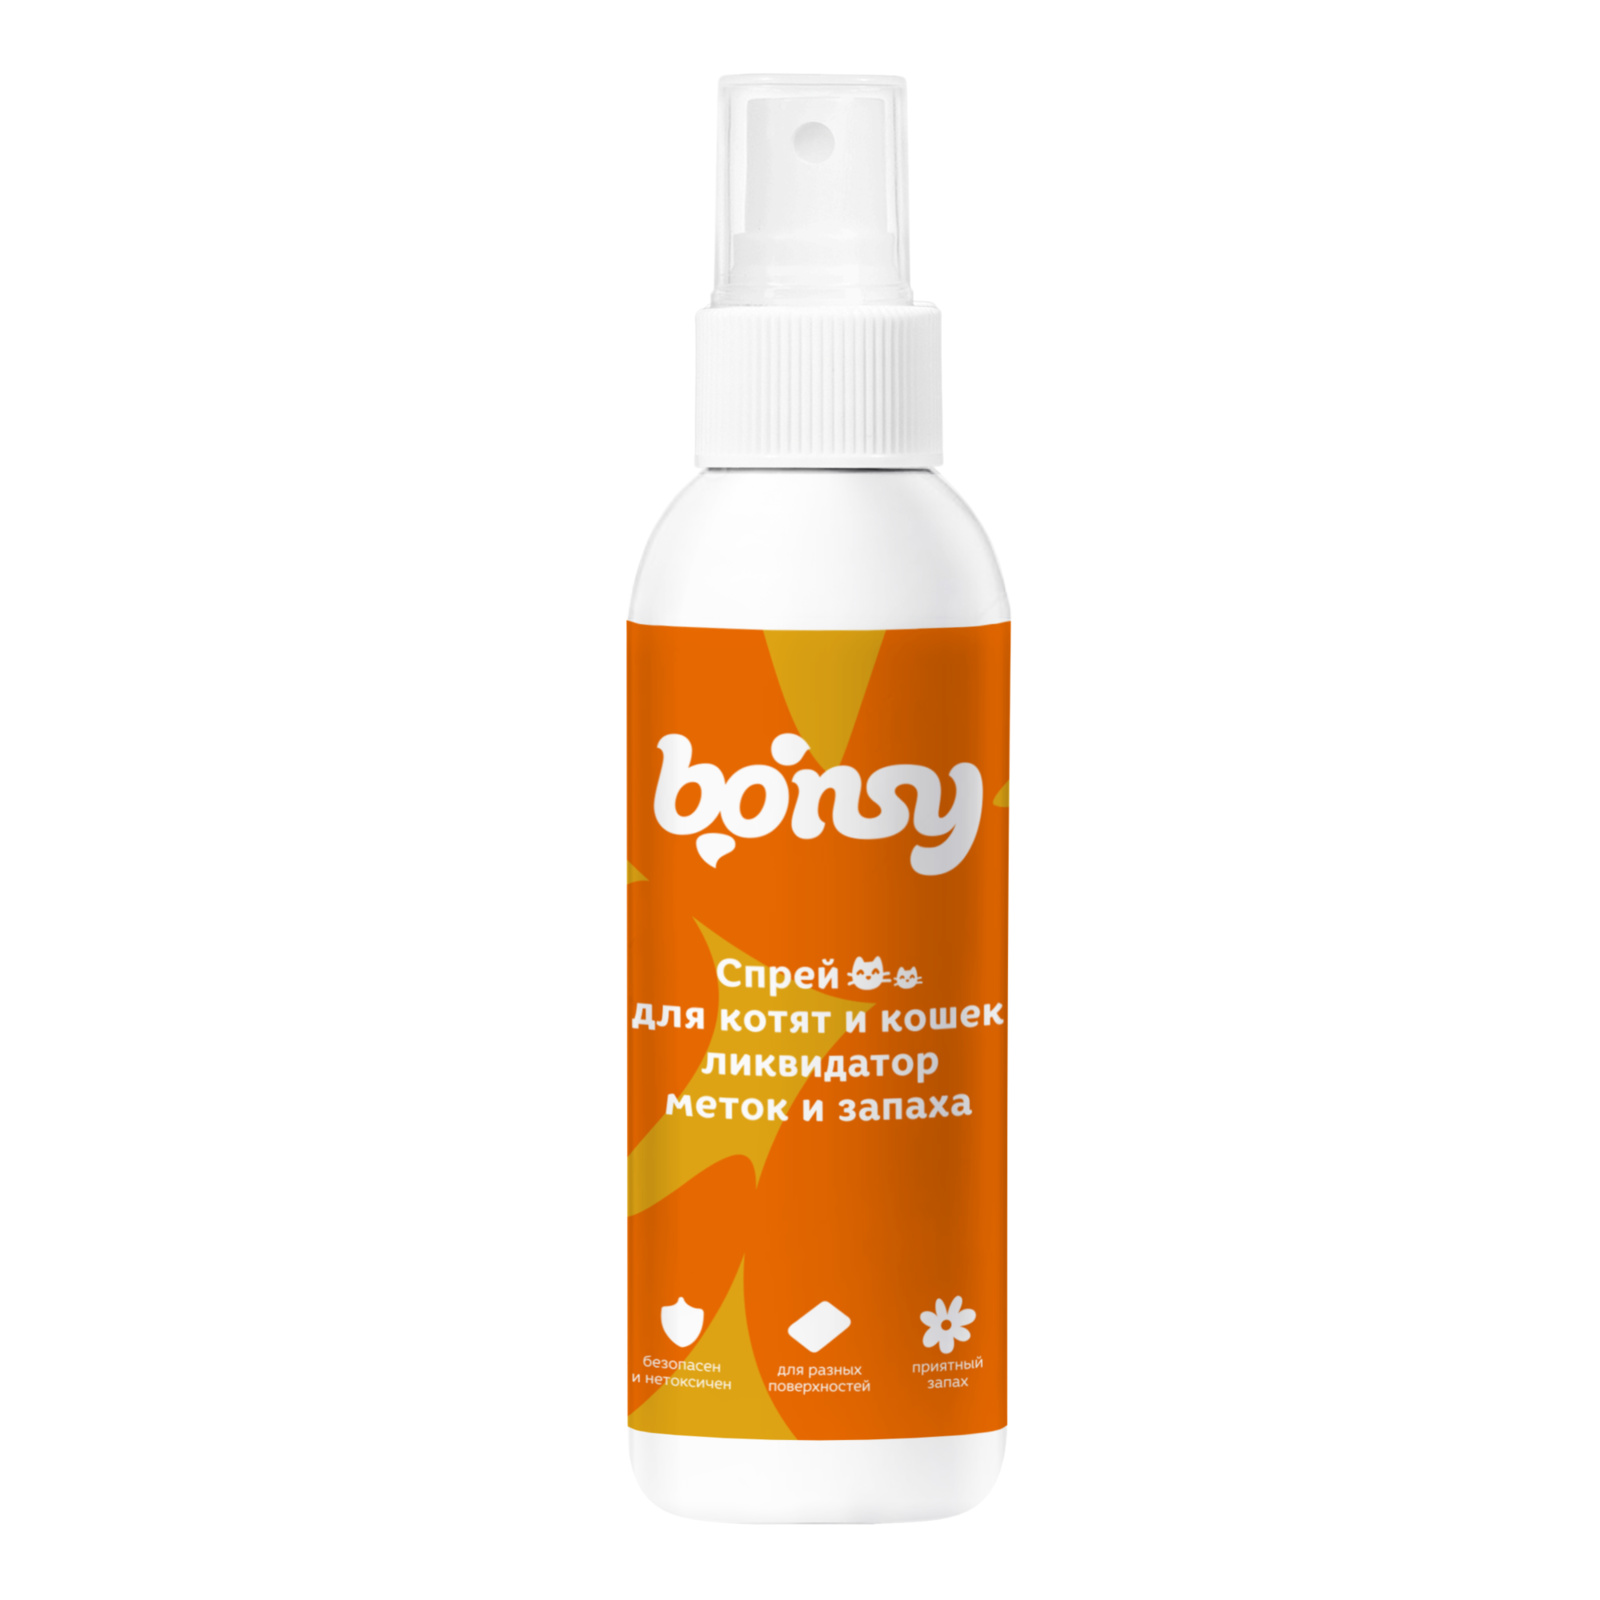 Bonsy Bonsy спрей «Ликвидатор меток и запаха» для кошек и котят (150 г) bonsy bonsy антипаразитарный биошампунь от блох и клещей для котят и кошек 250 г